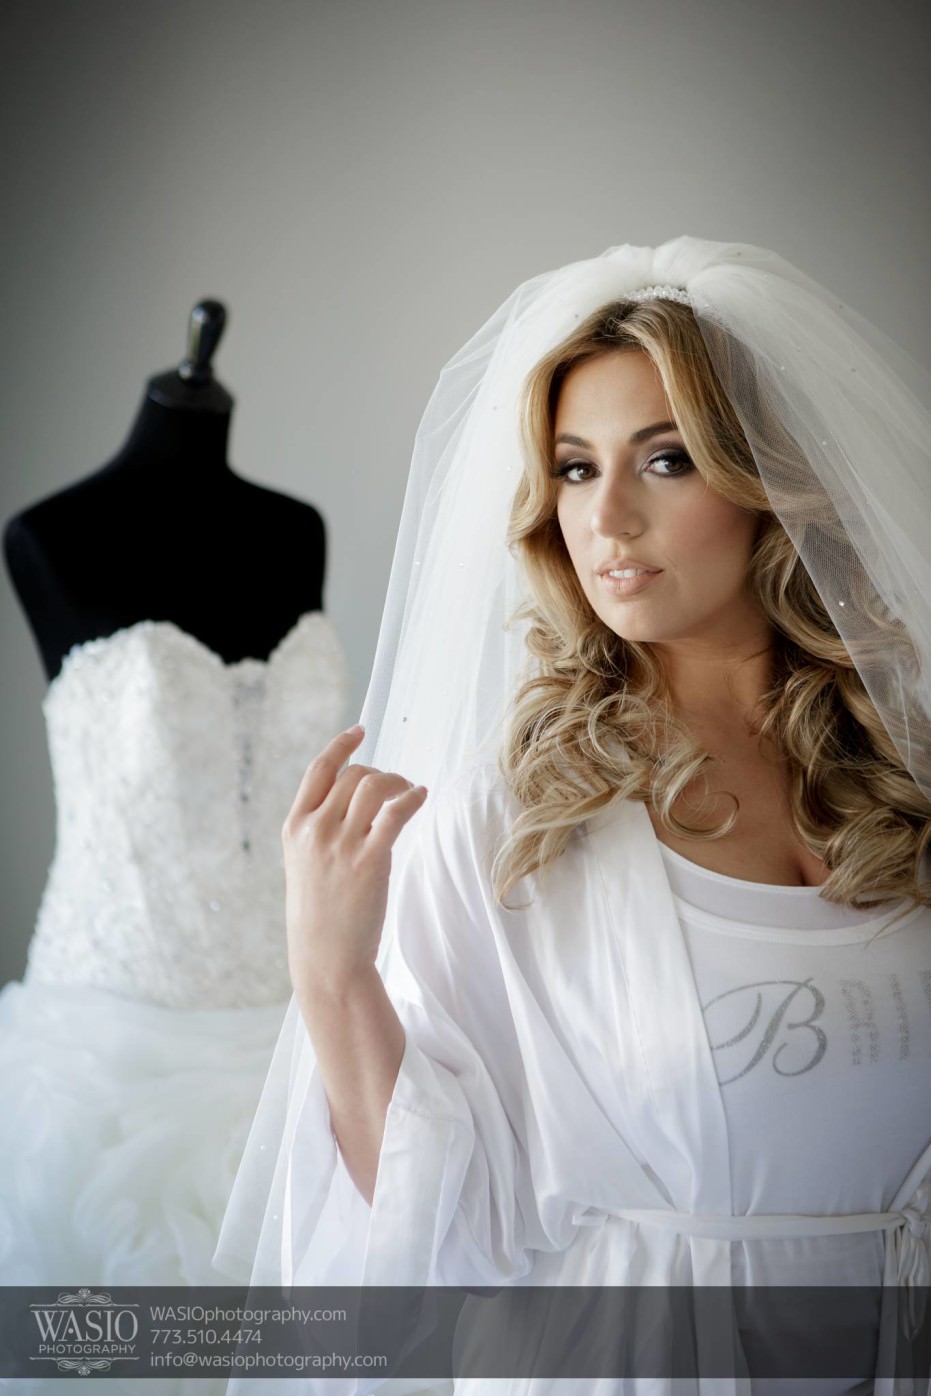 Country-club-wedding-white-bride-veil-dress-0069-931x1396 The Country Club Wedding - Nicole + Dean